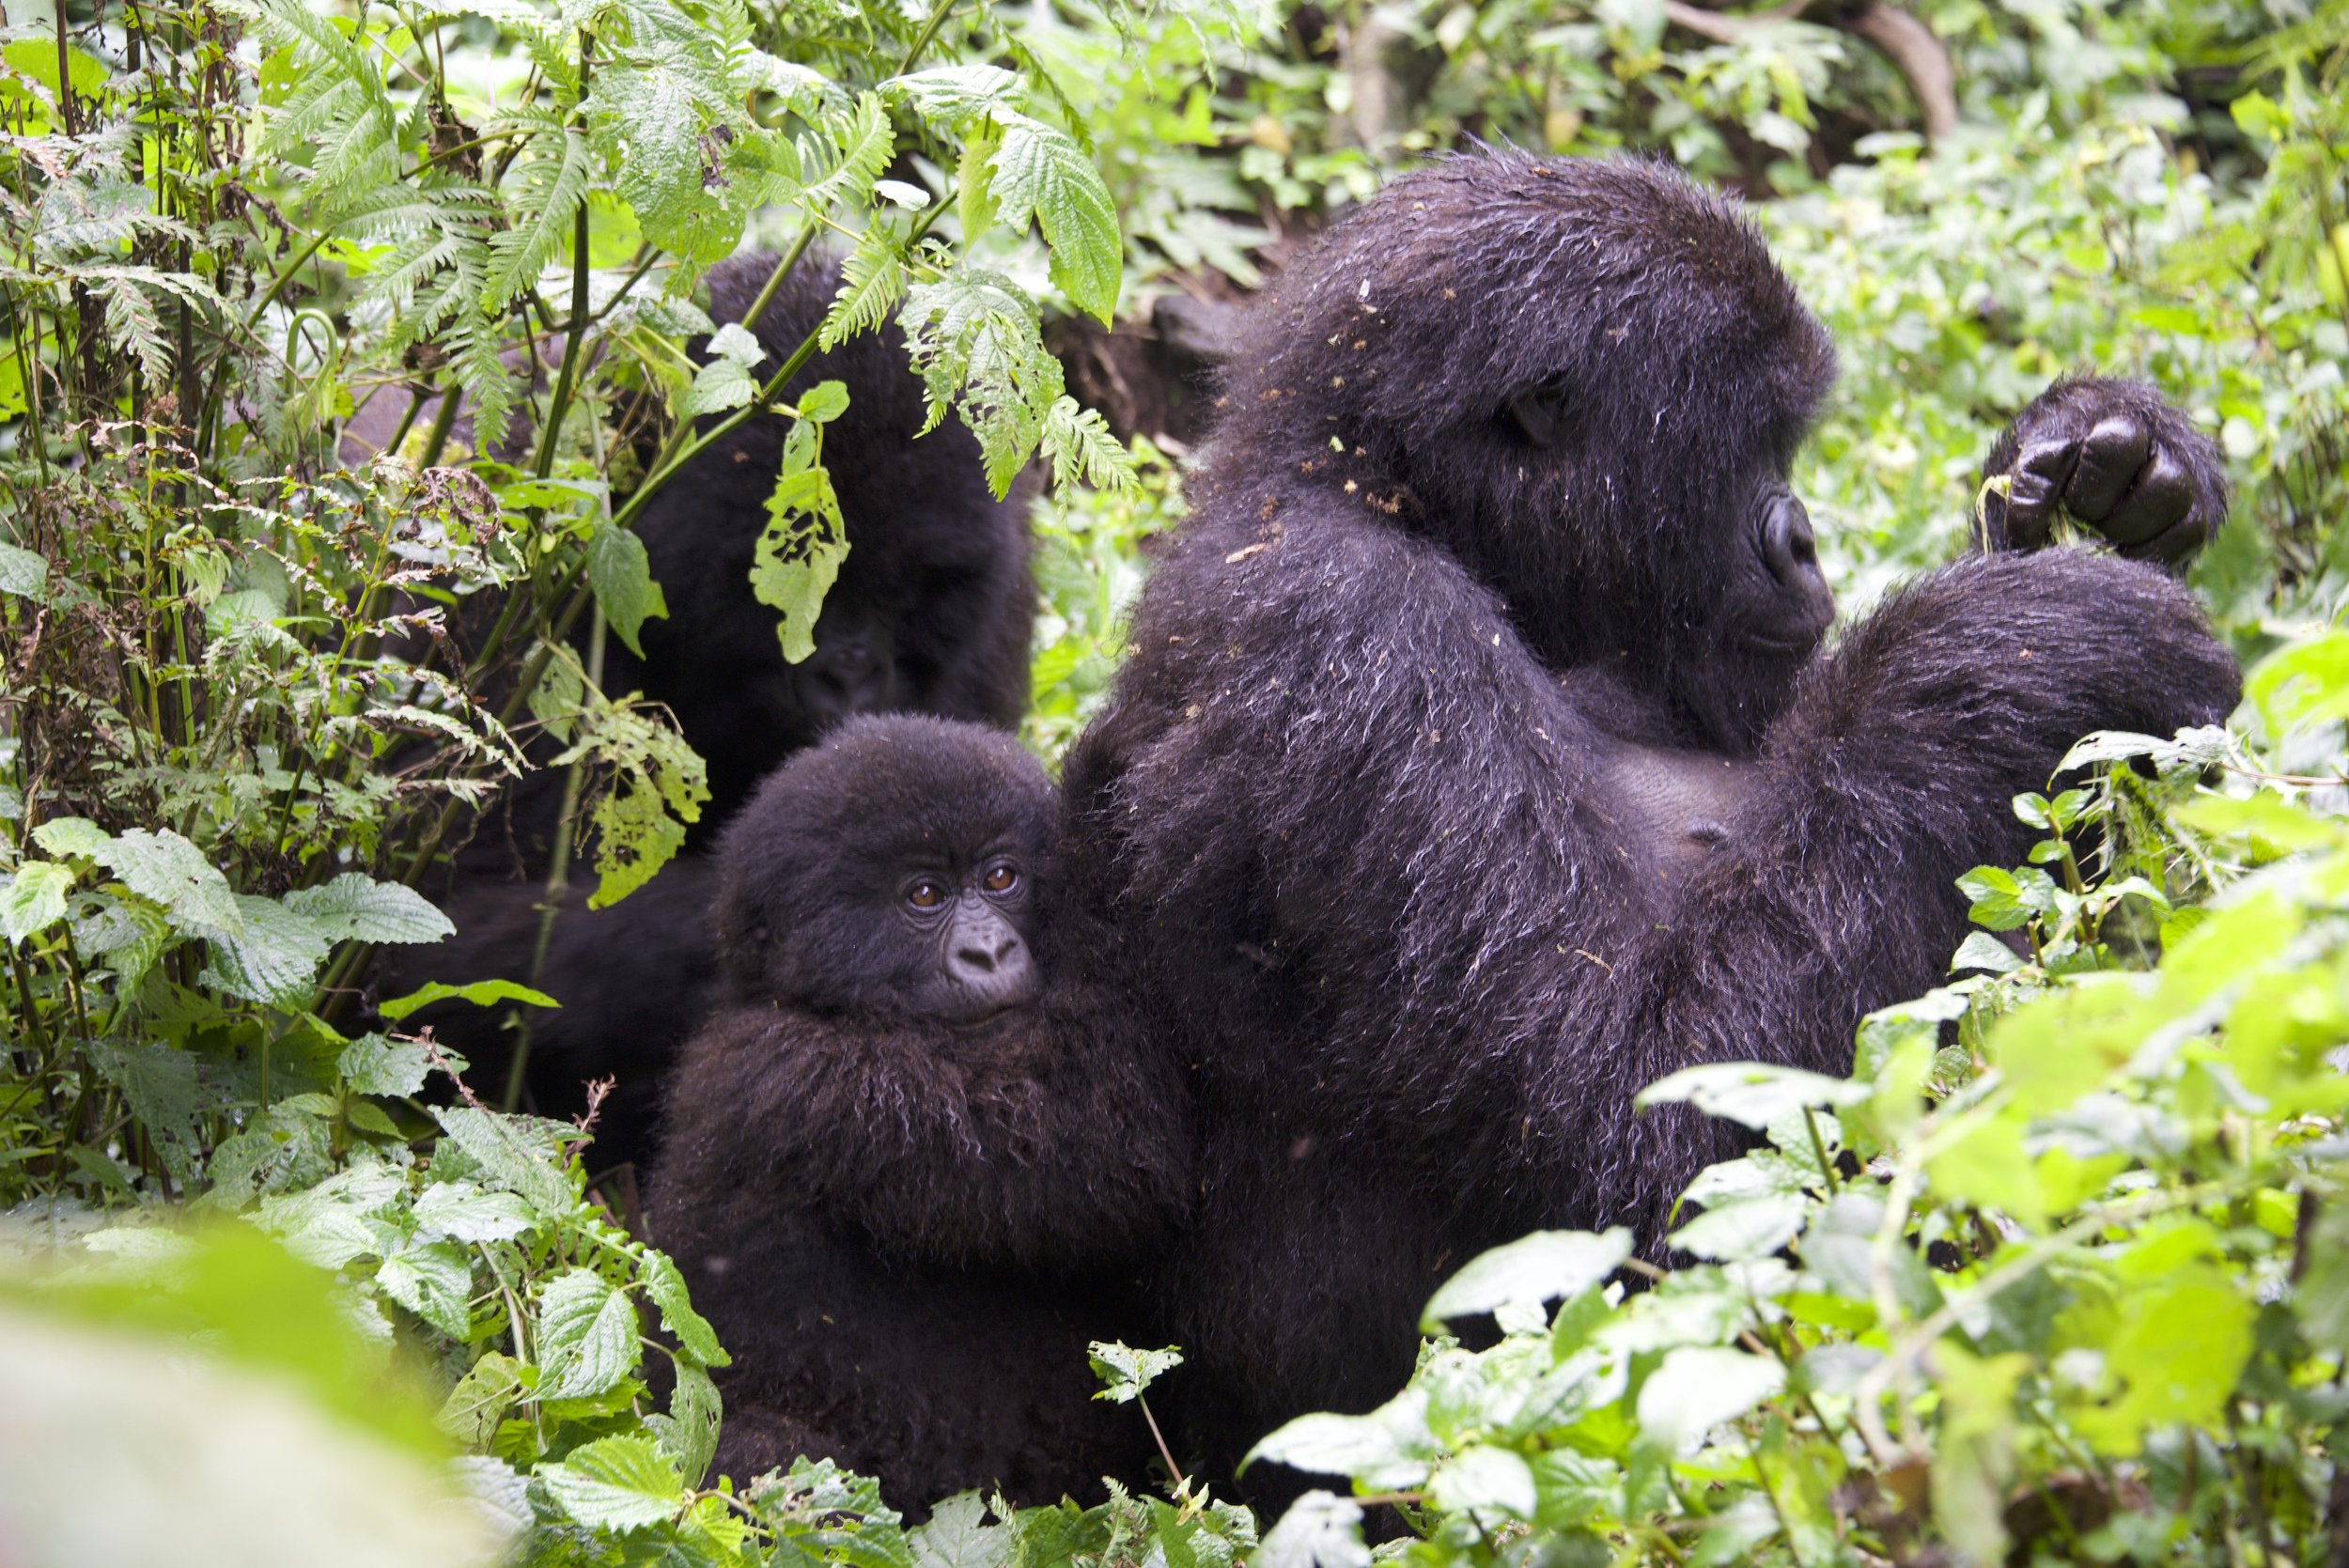  Infant gorilla holding onto its mother’s back. Photo courtesy of Caitlin Starowicz. 